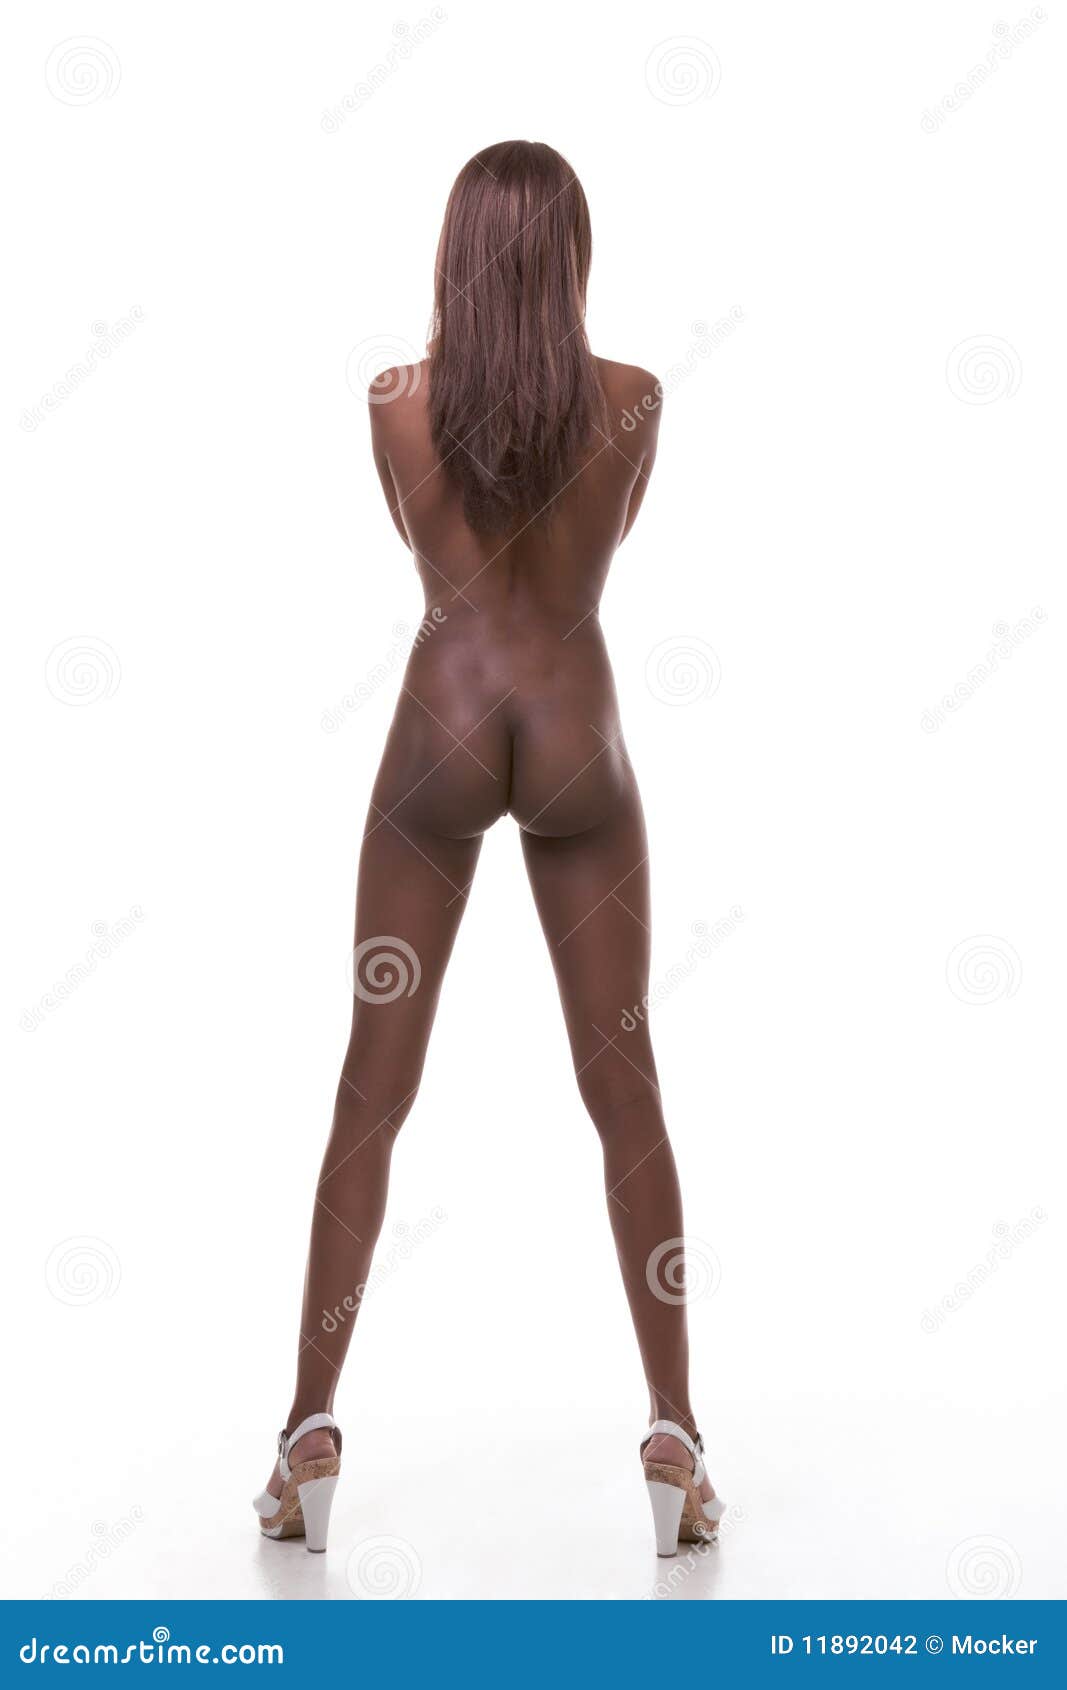 from Kaeden black nude sex women fuck